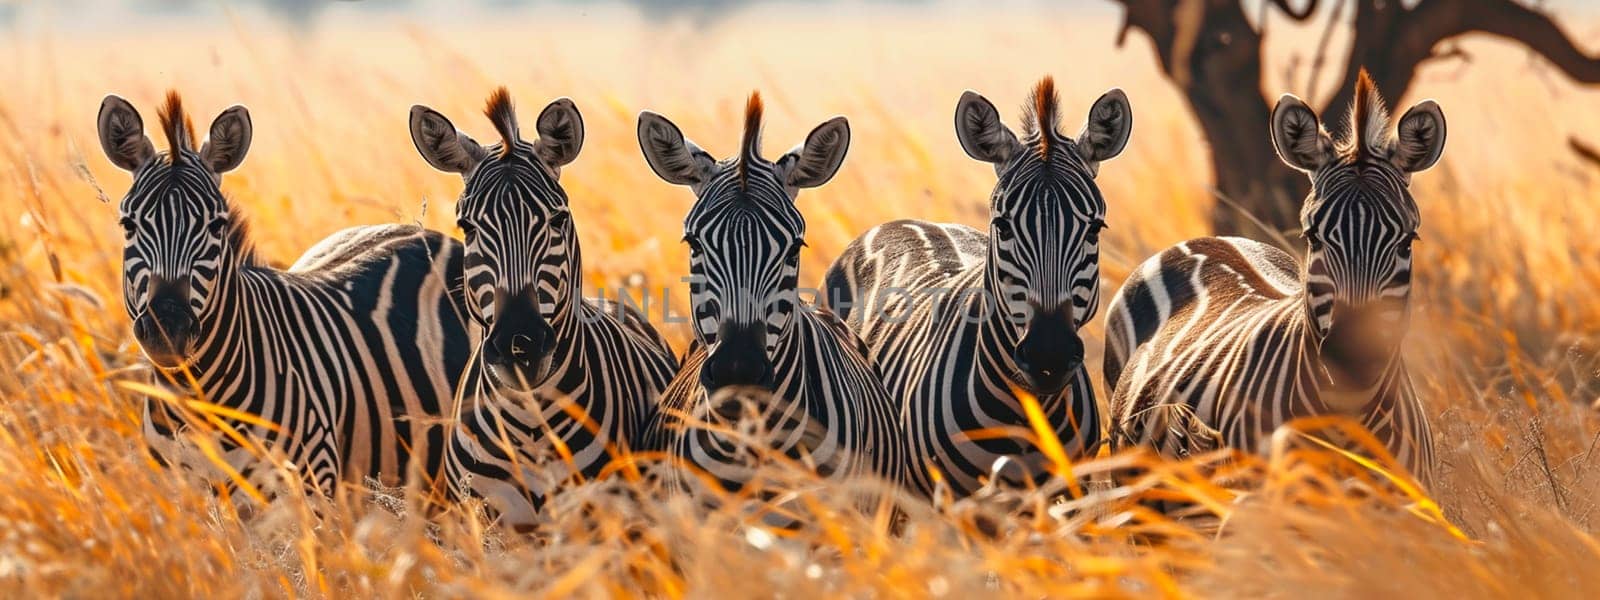 portrait of zebras in the wild. Selective focus. animal.